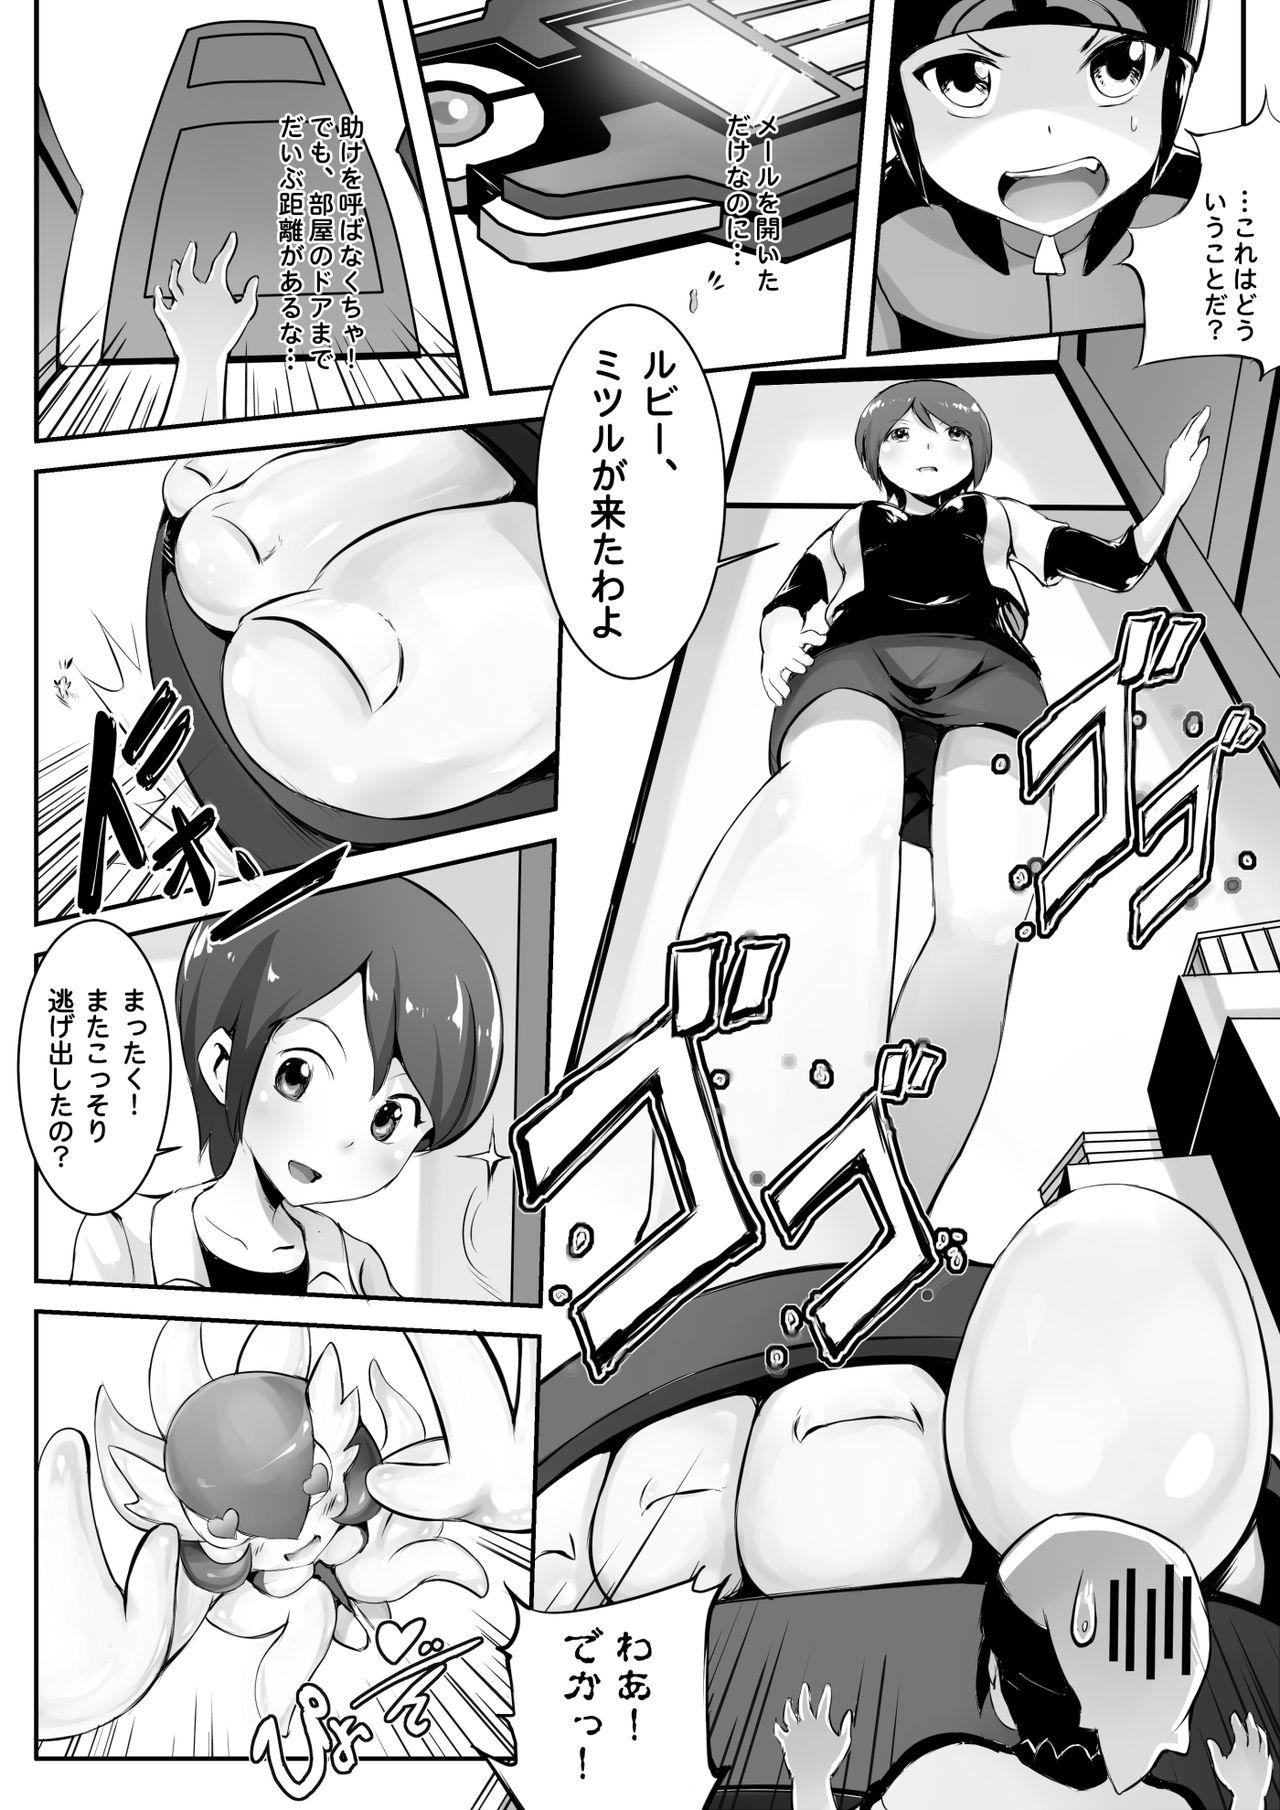 Gozando Pokemon GS/ BEGIN - Pokemon Girl Girl - Page 2